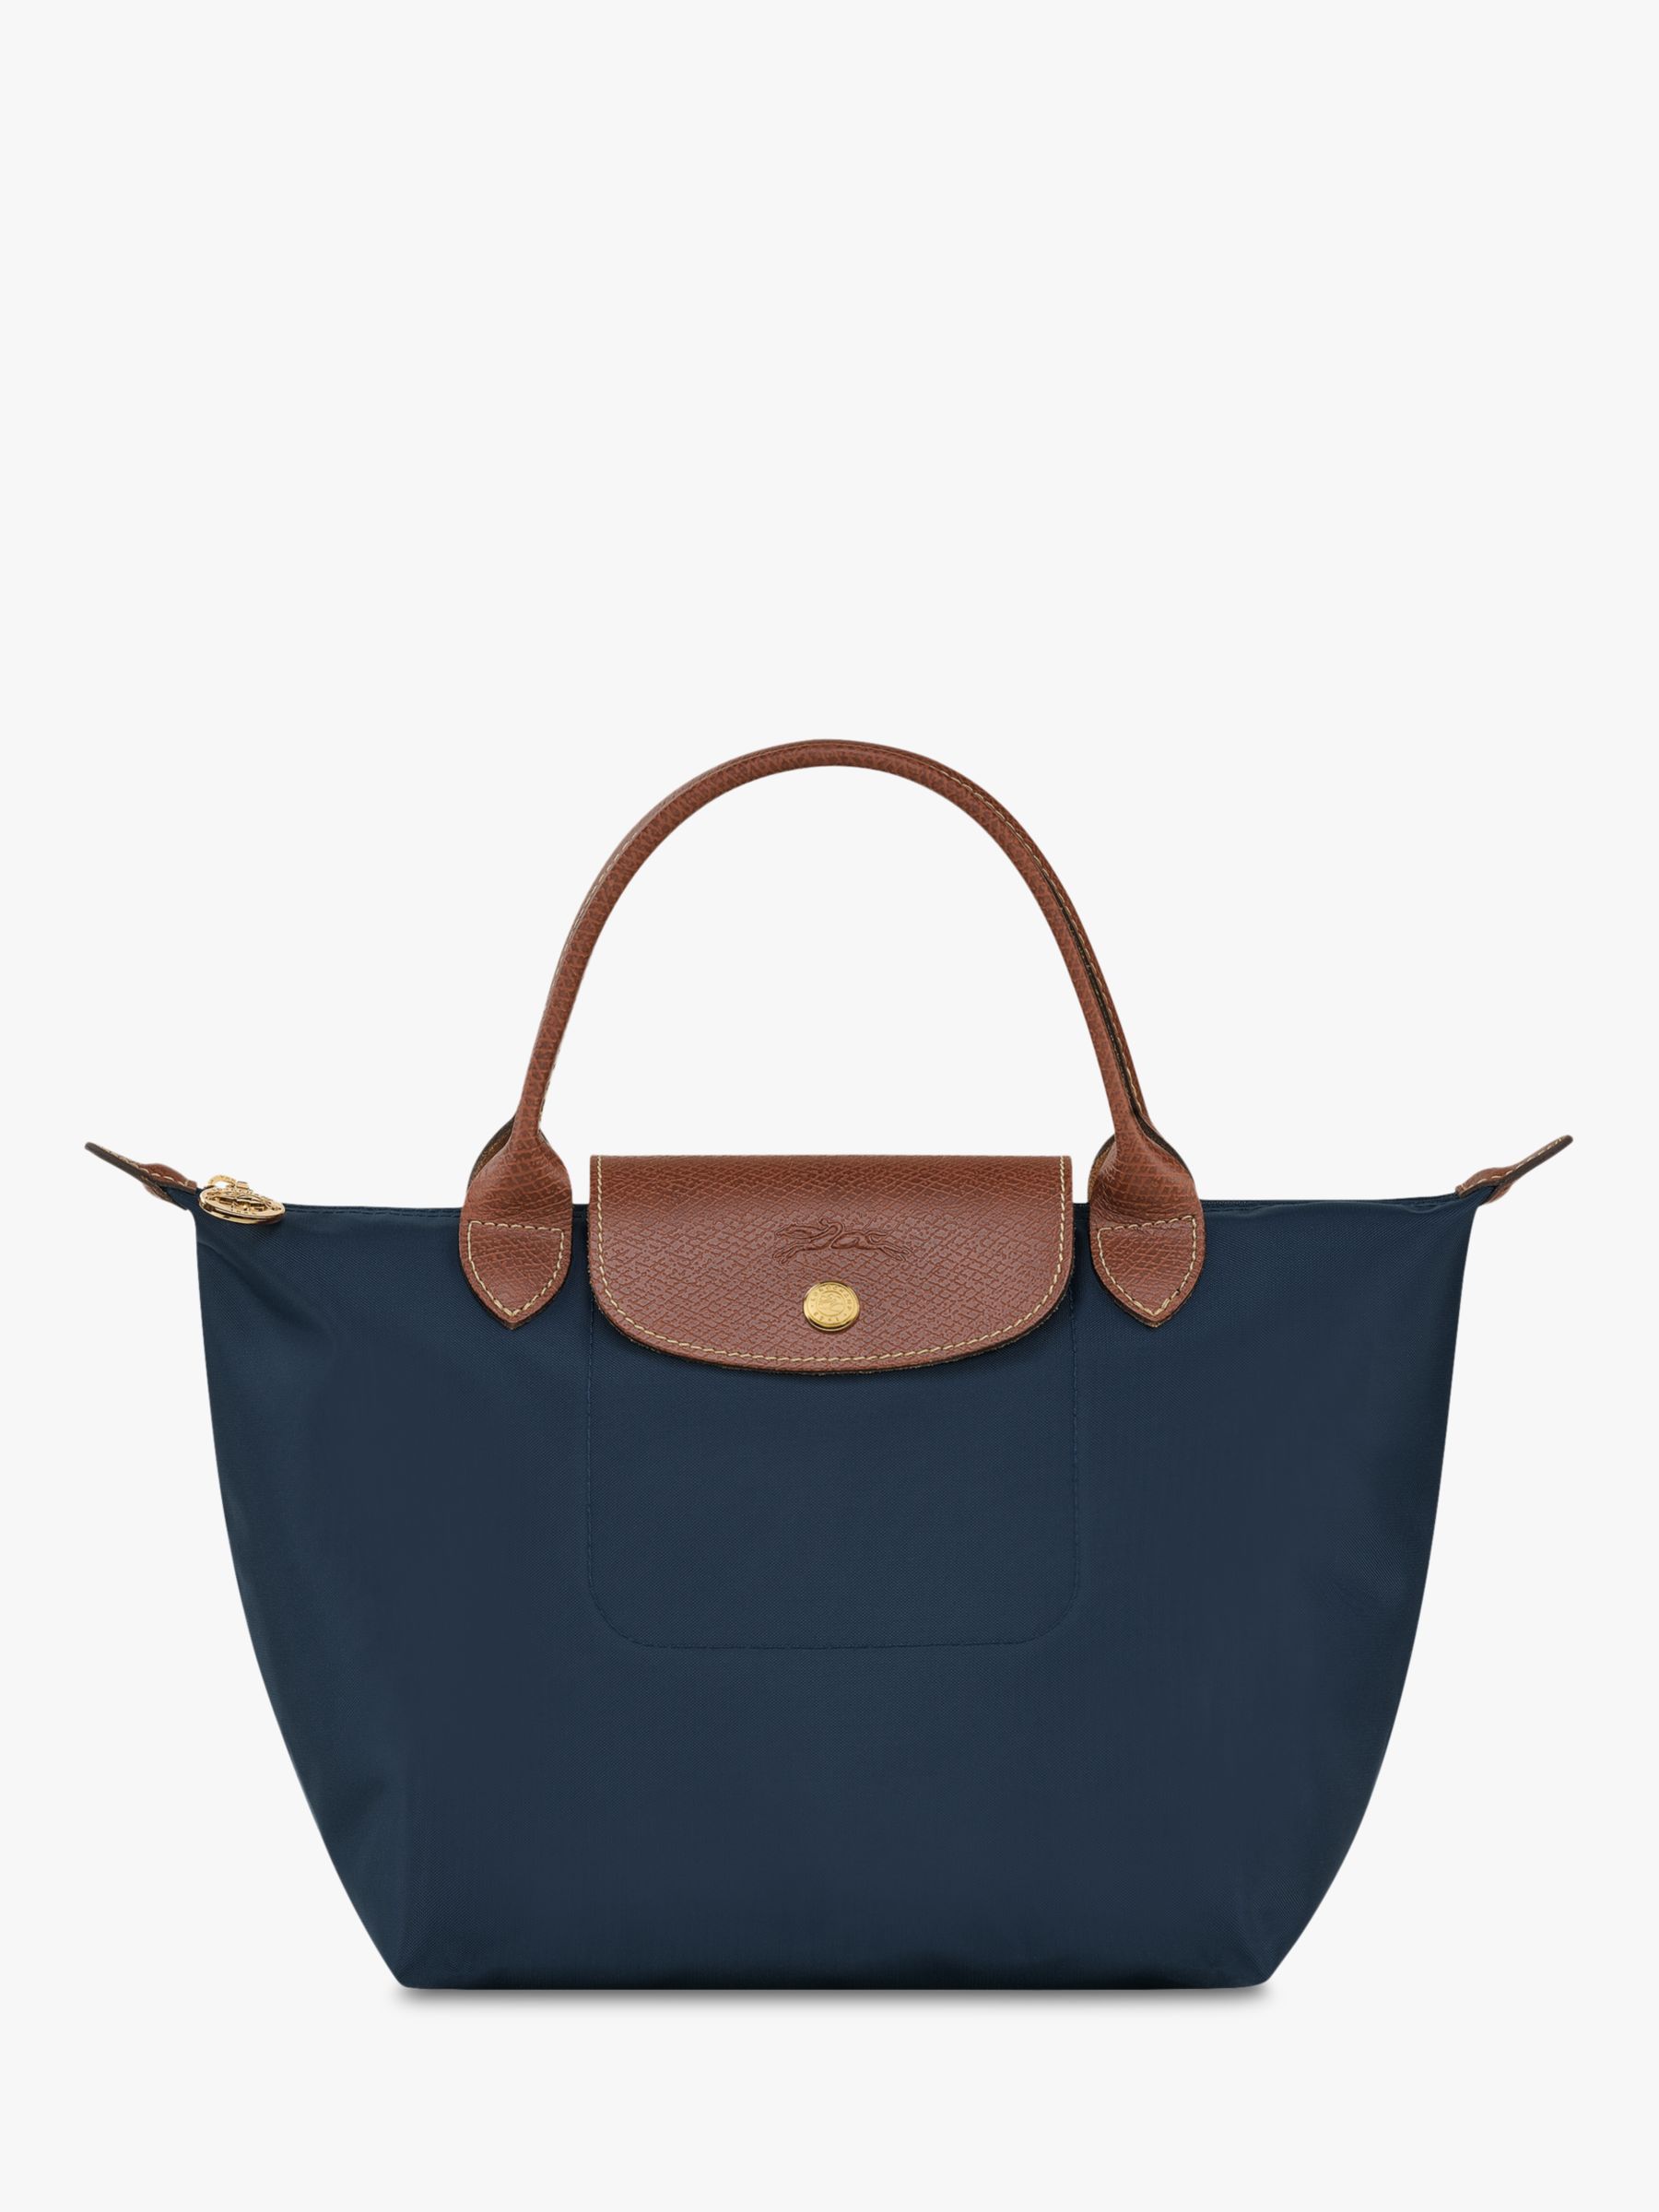 Small Navy Longchamp Bag Hotsell | website.jkuat.ac.ke